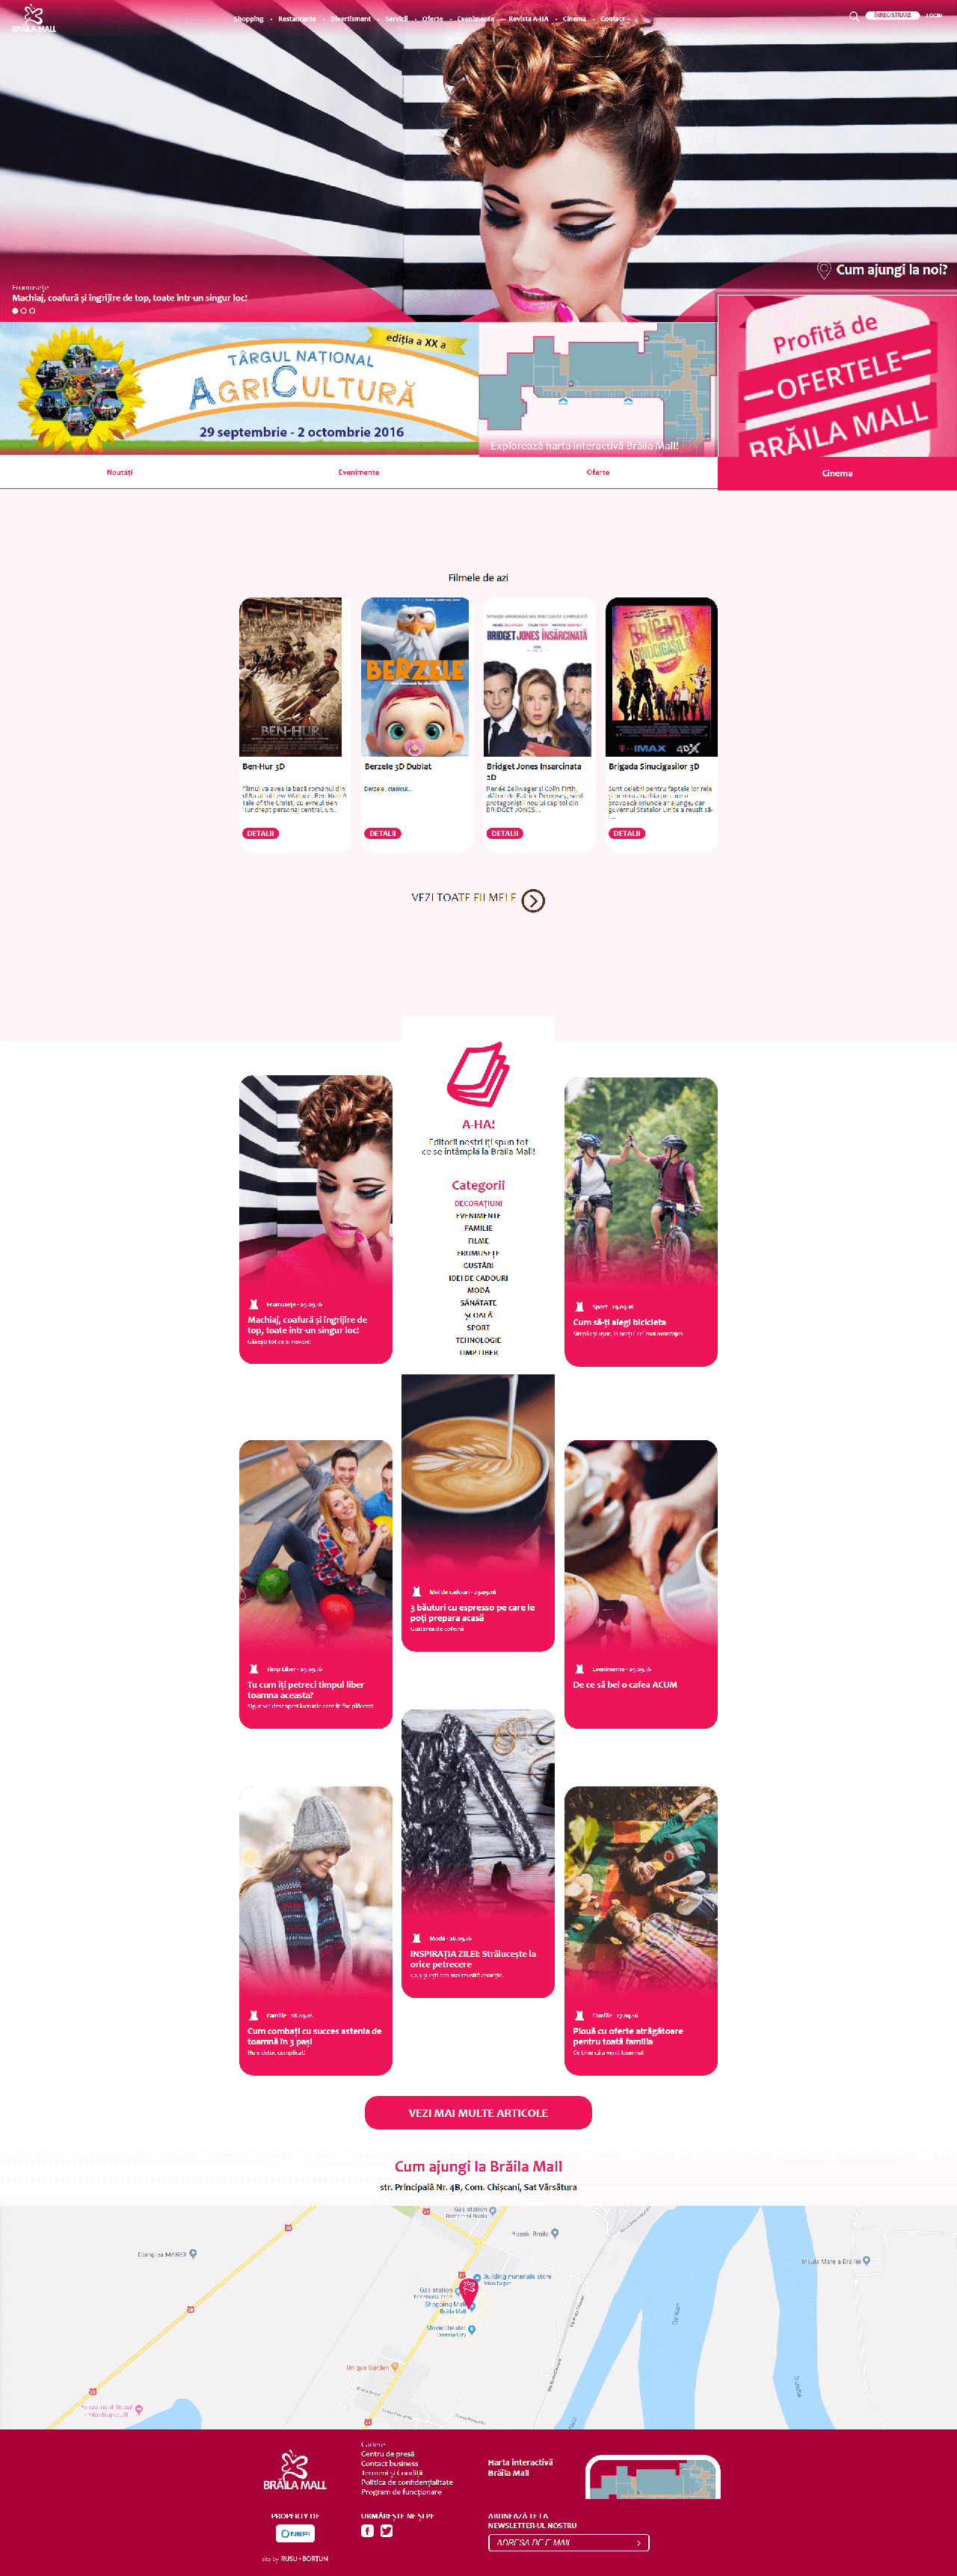 Braila Mall website design